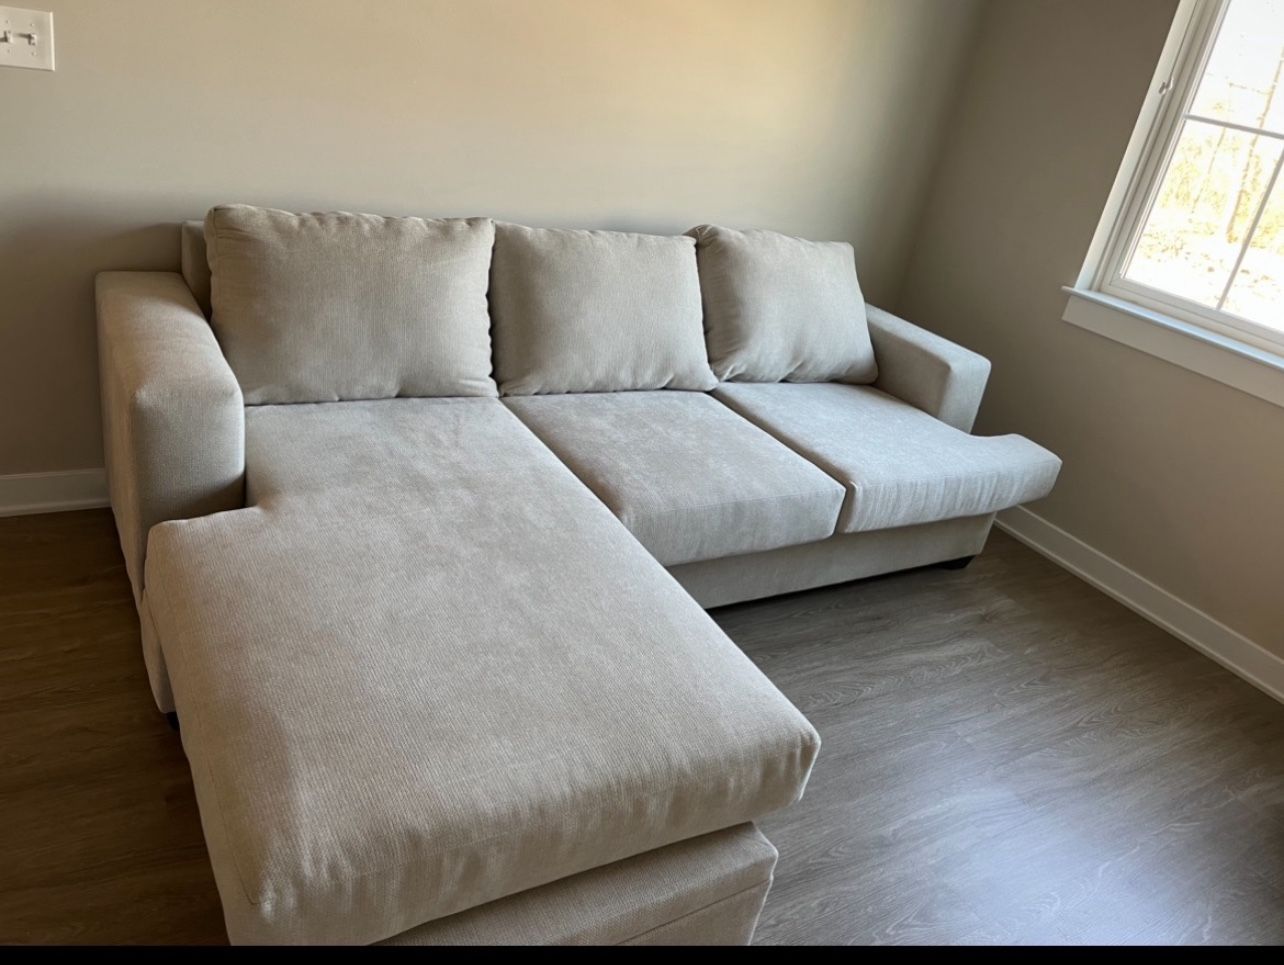 Bonaterra Sand 97" Sofa with Reversible Chaise $400